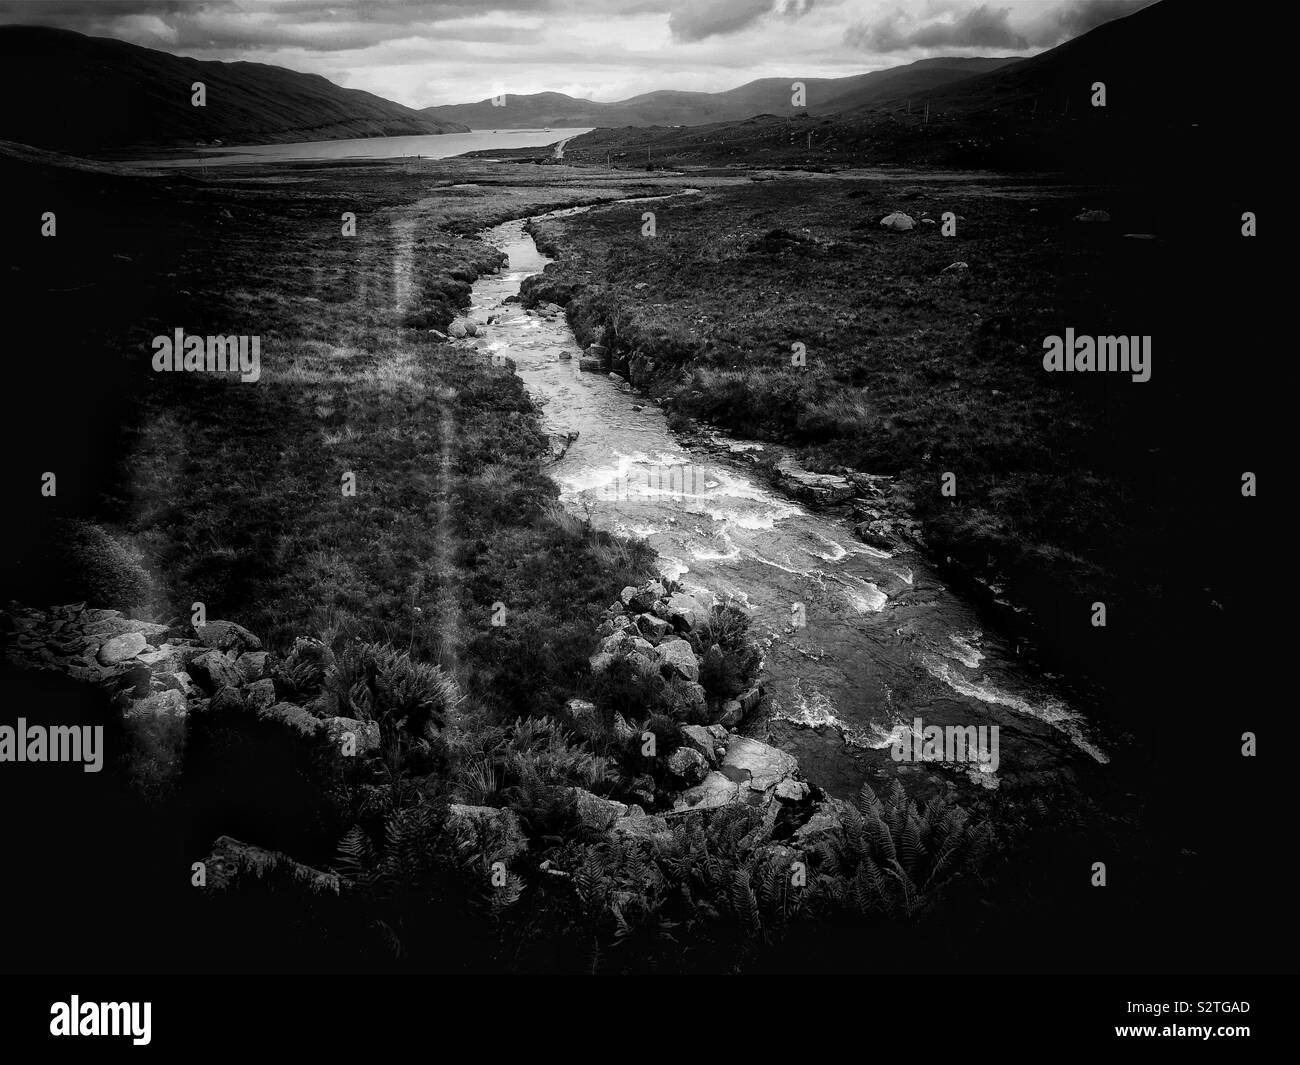 Black and white image of river gushing over rocks in wild landscape, Isle of Skye, Inner Hebrides, Scotland Stock Photo